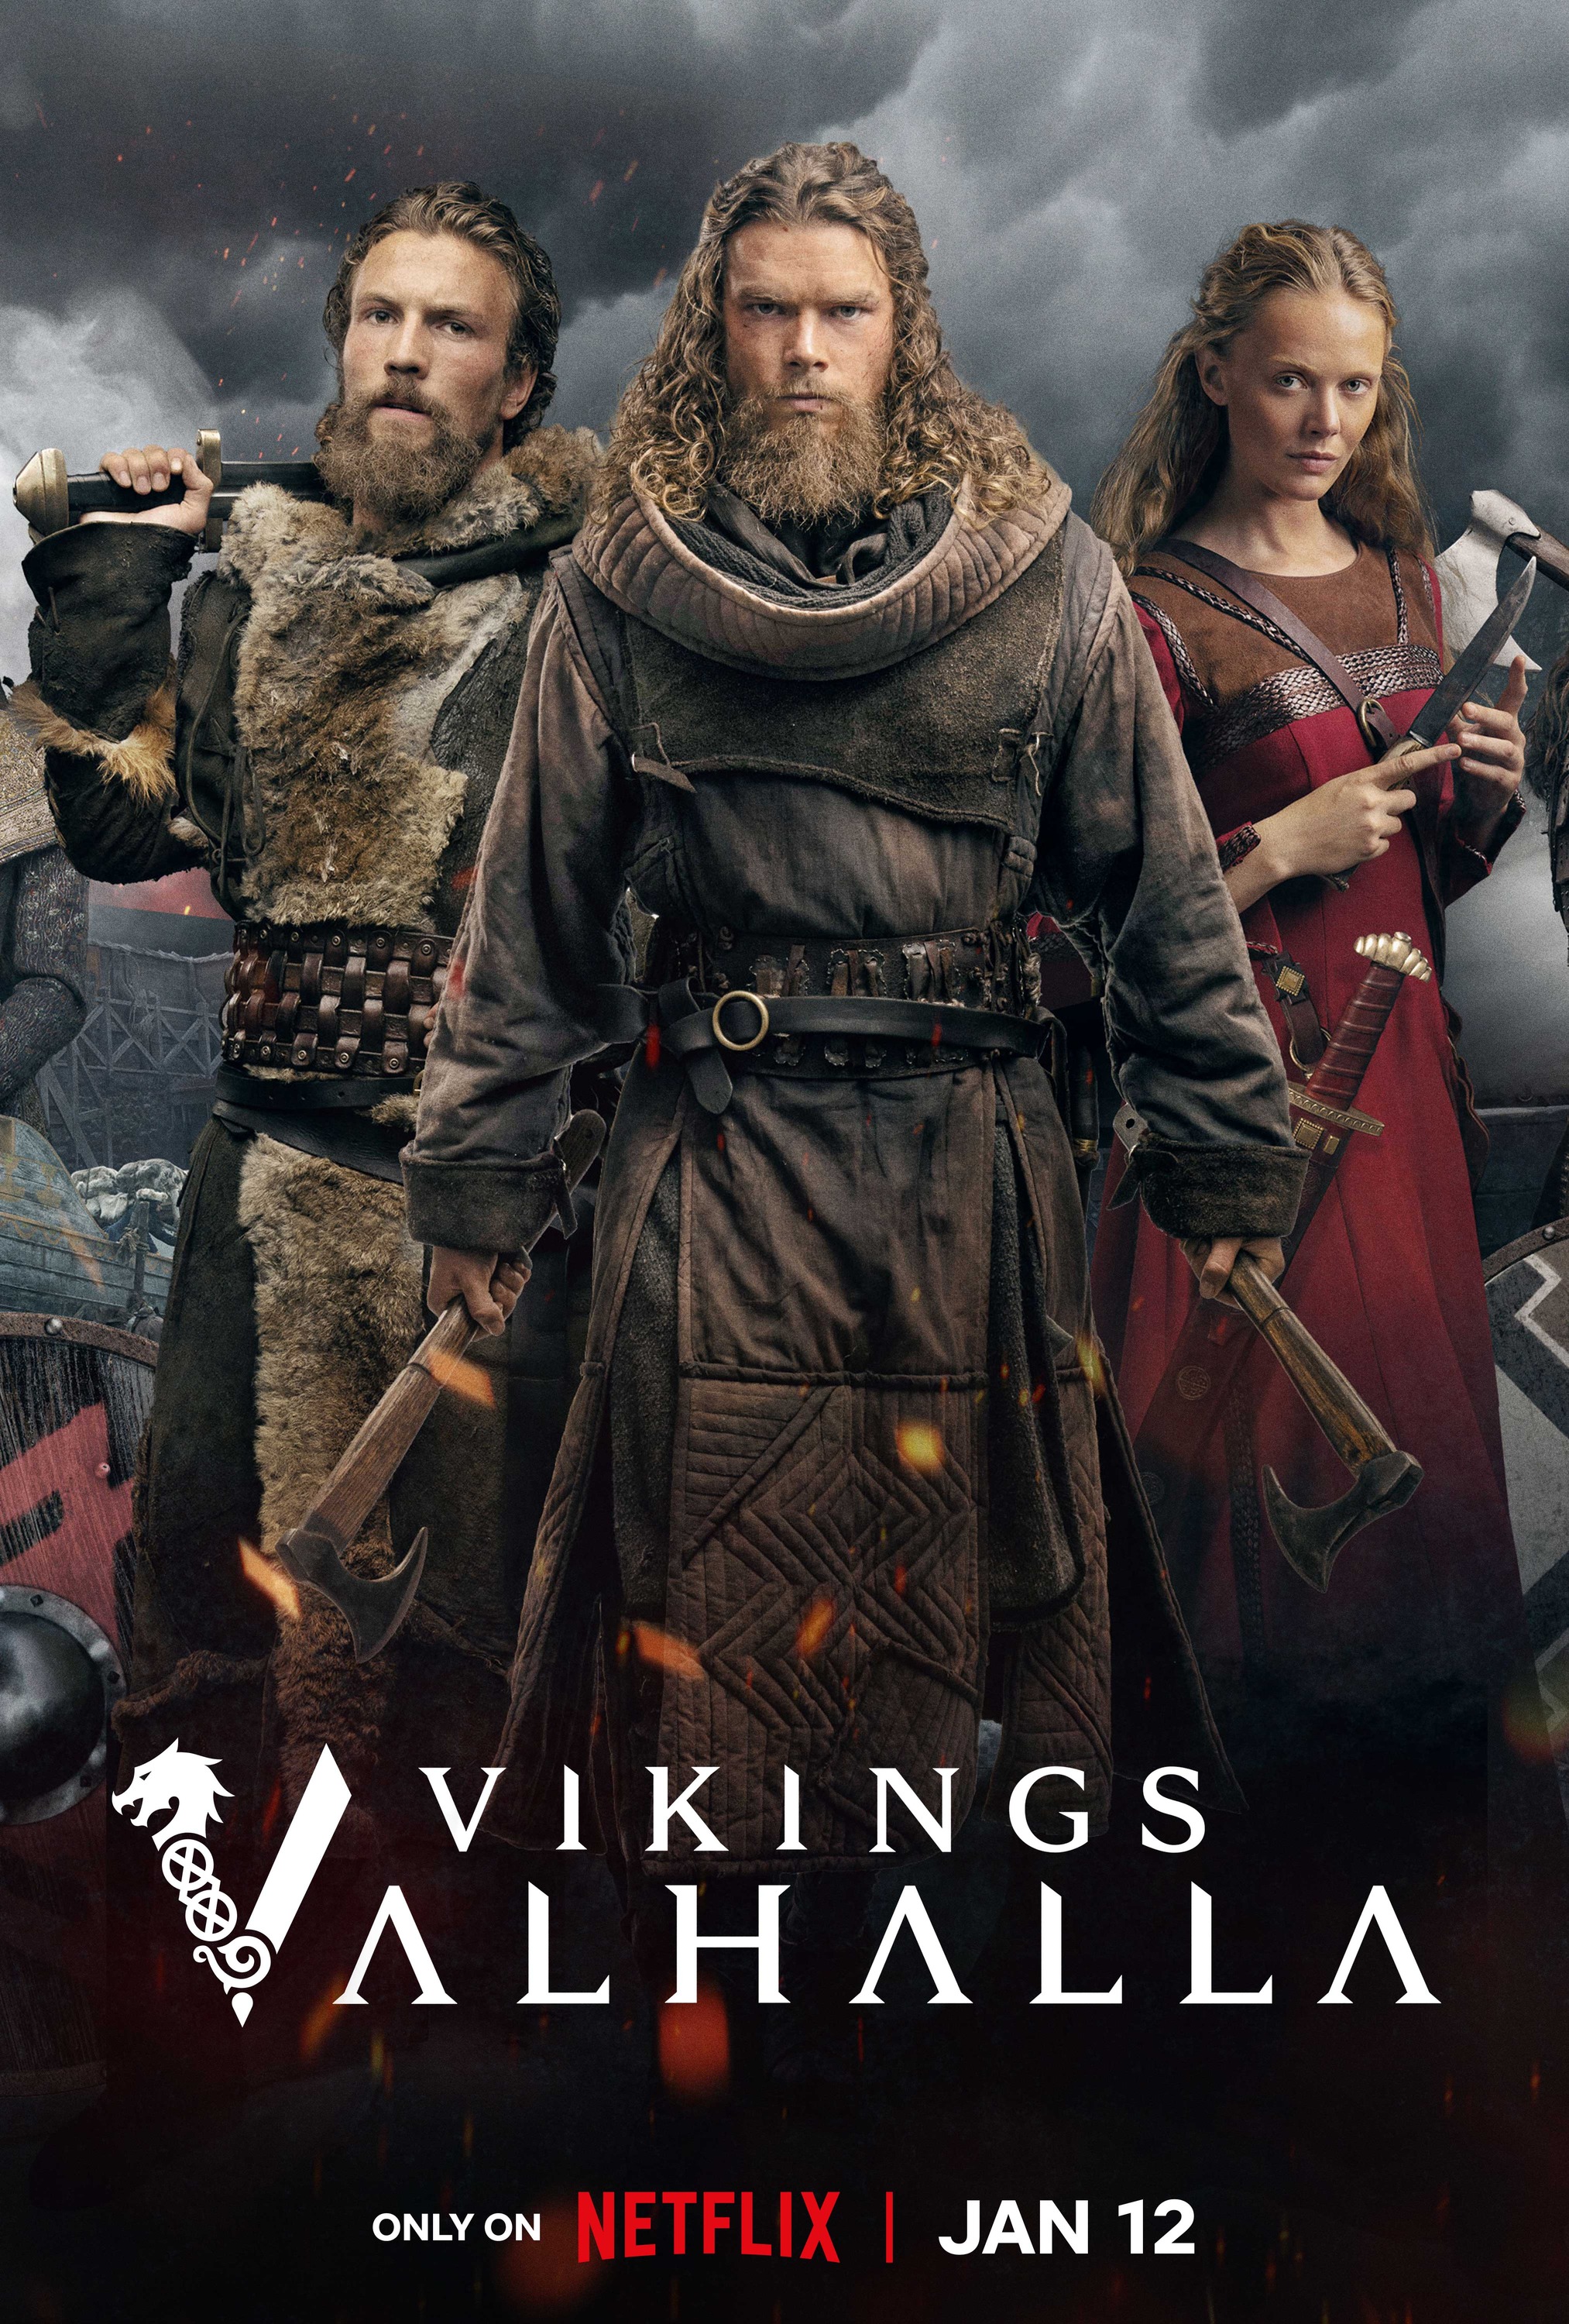 Mega Sized TV Poster Image for Vikings: Valhalla (#18 of 18)